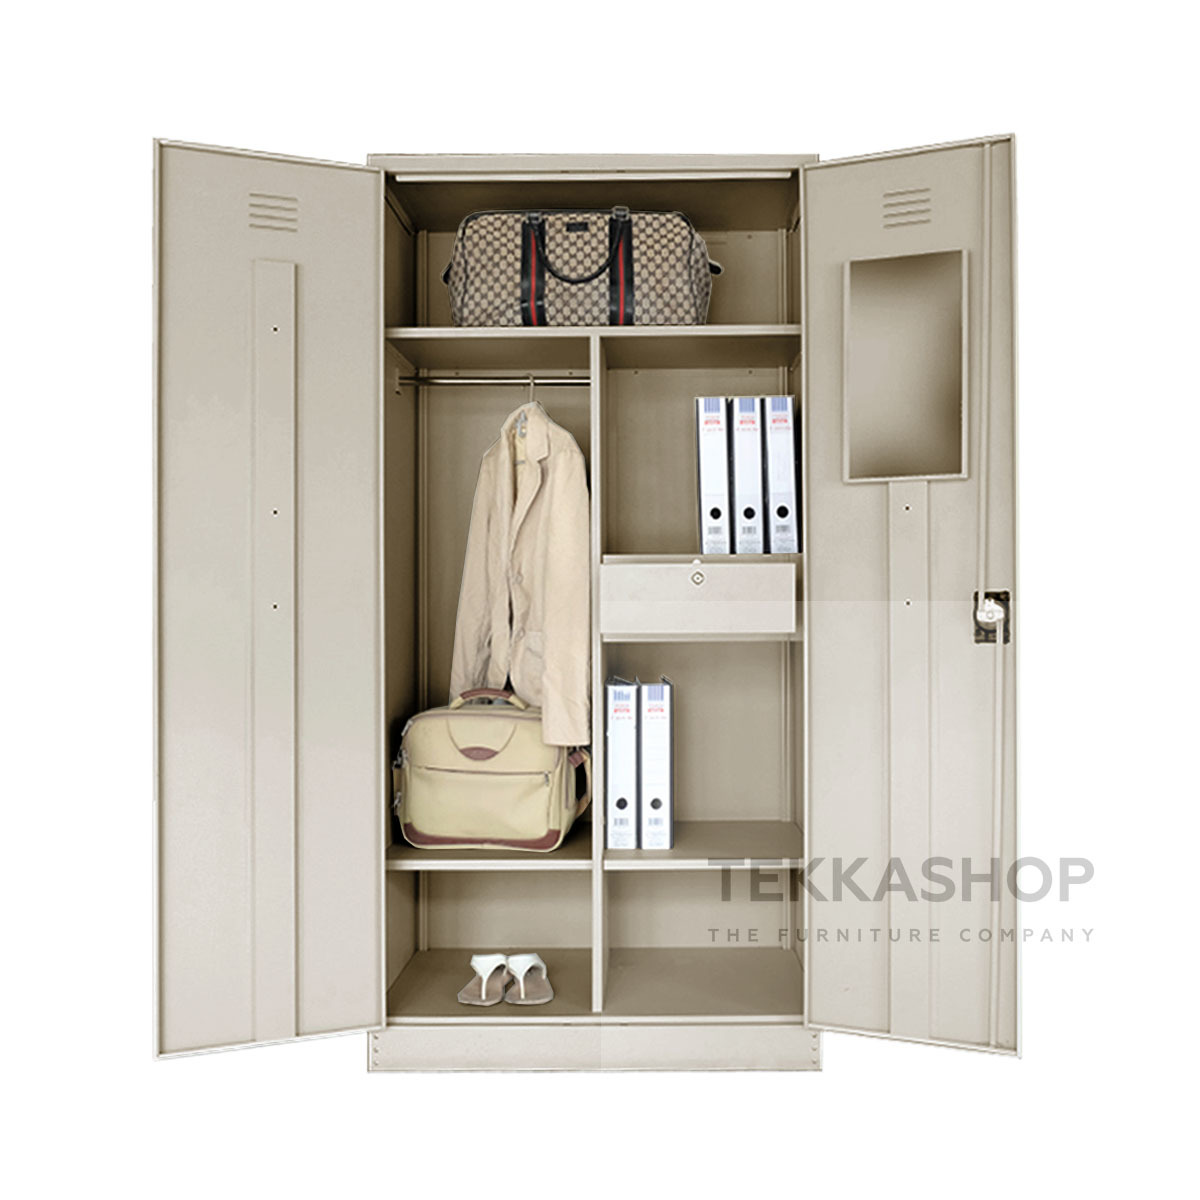 Tekkashop Cssfc5bei Full Height Metal Wardrobe Cabinet Storage